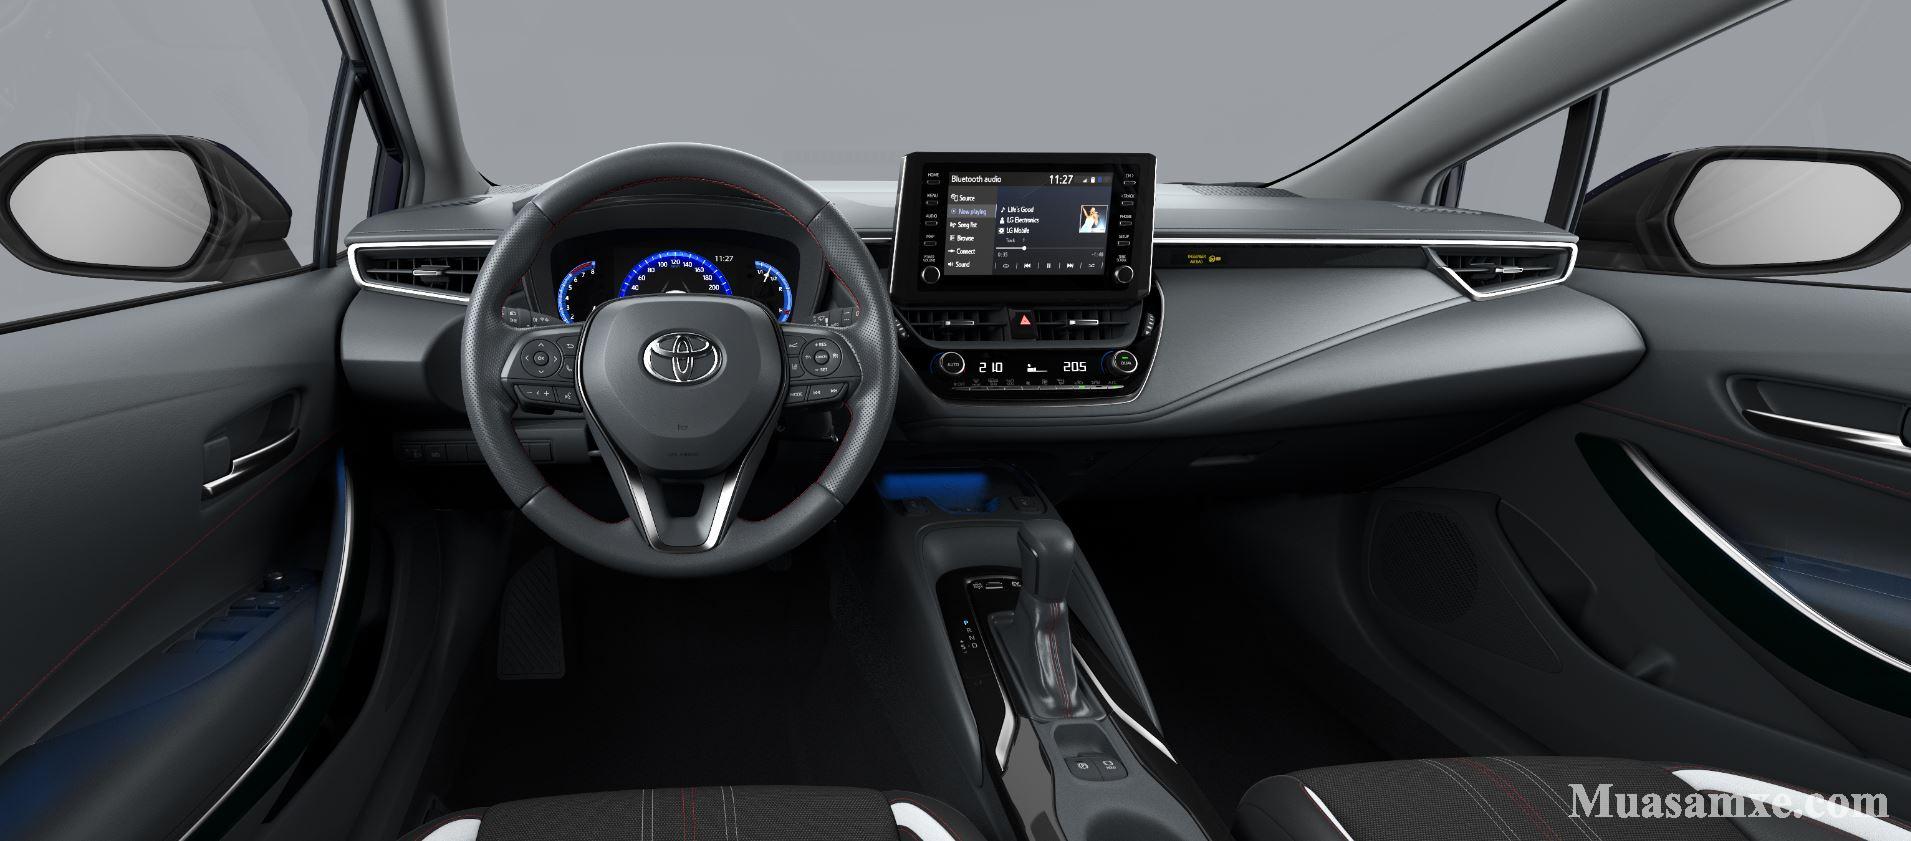 Toyota-Corolla-GR-Sport-interior - MuasamXe.com